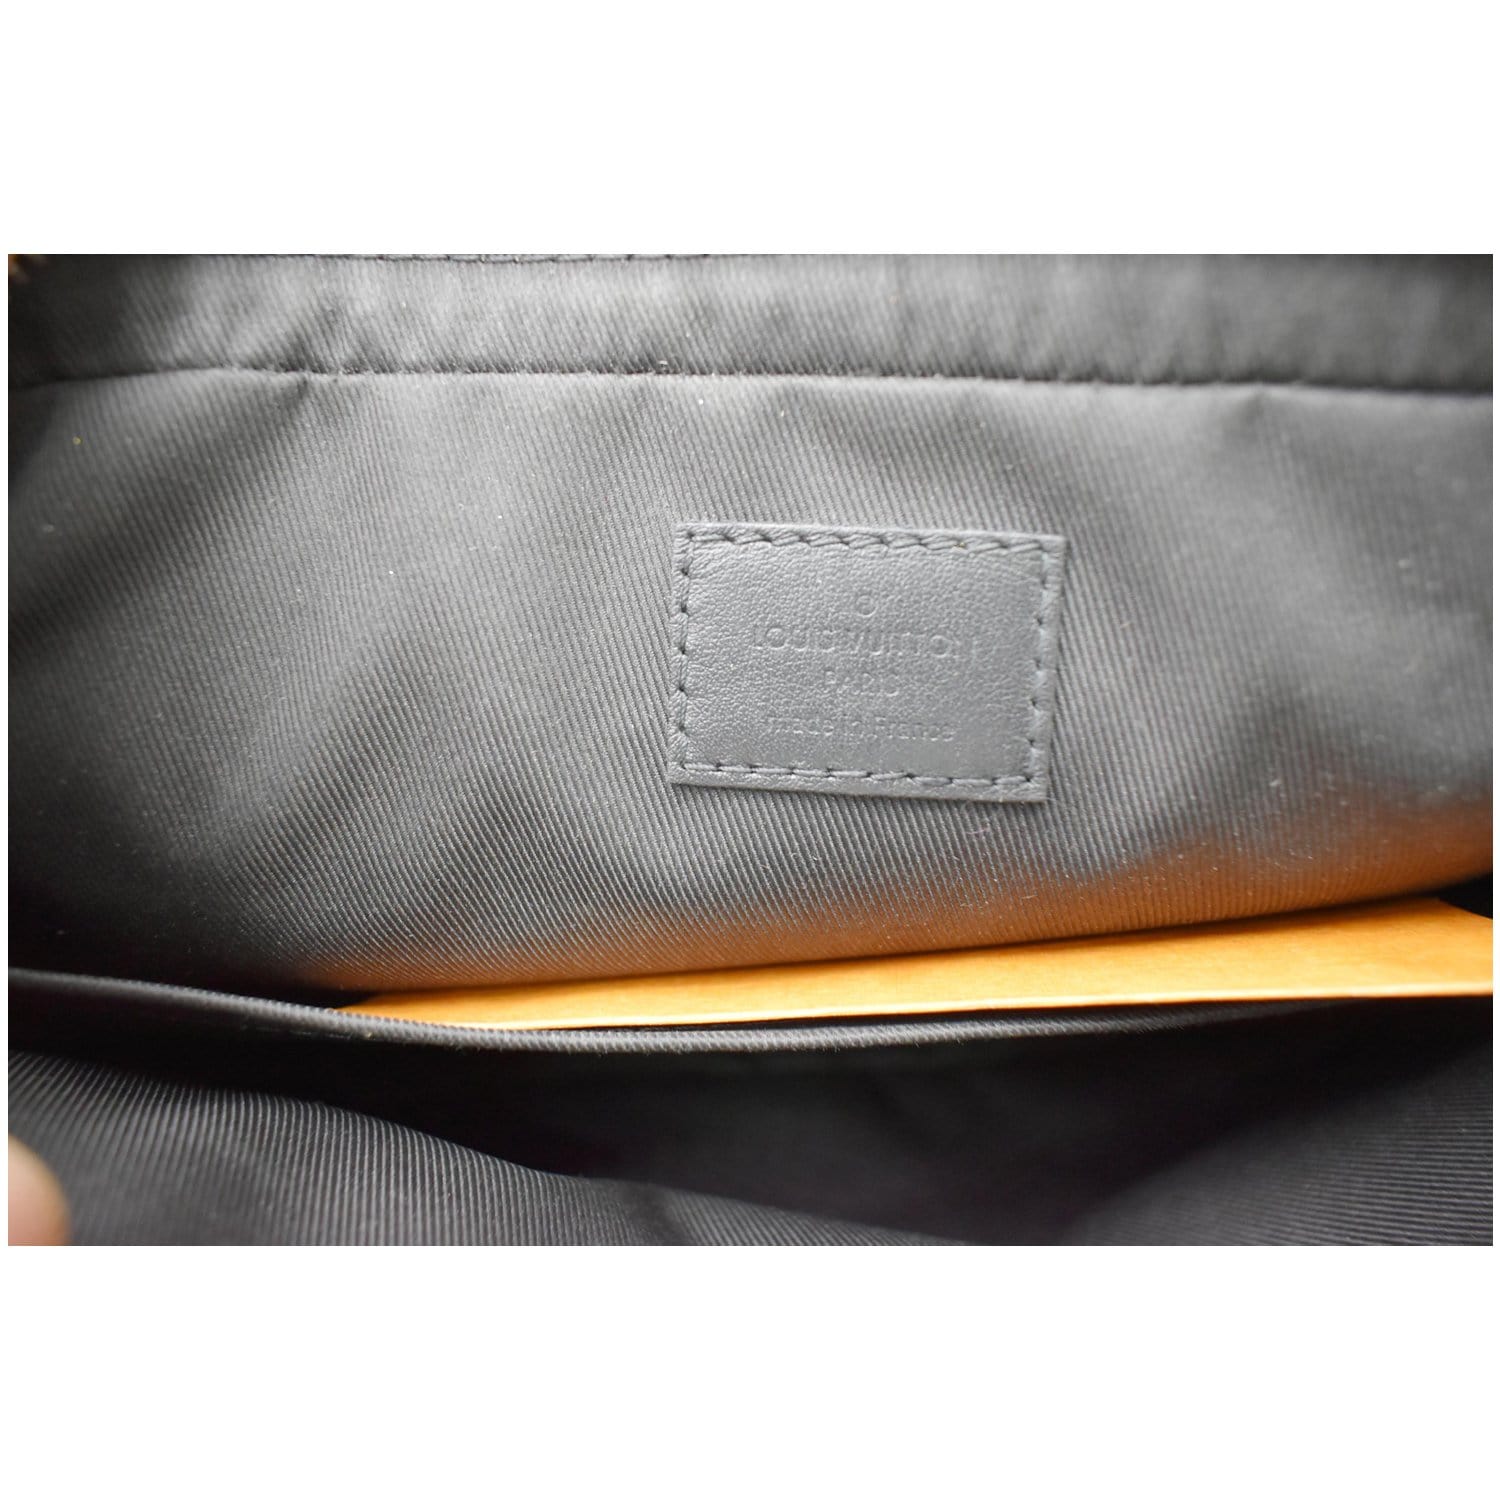 Louis+Vuitton+Duo+Messenger+Bag+Black+Leather for sale online